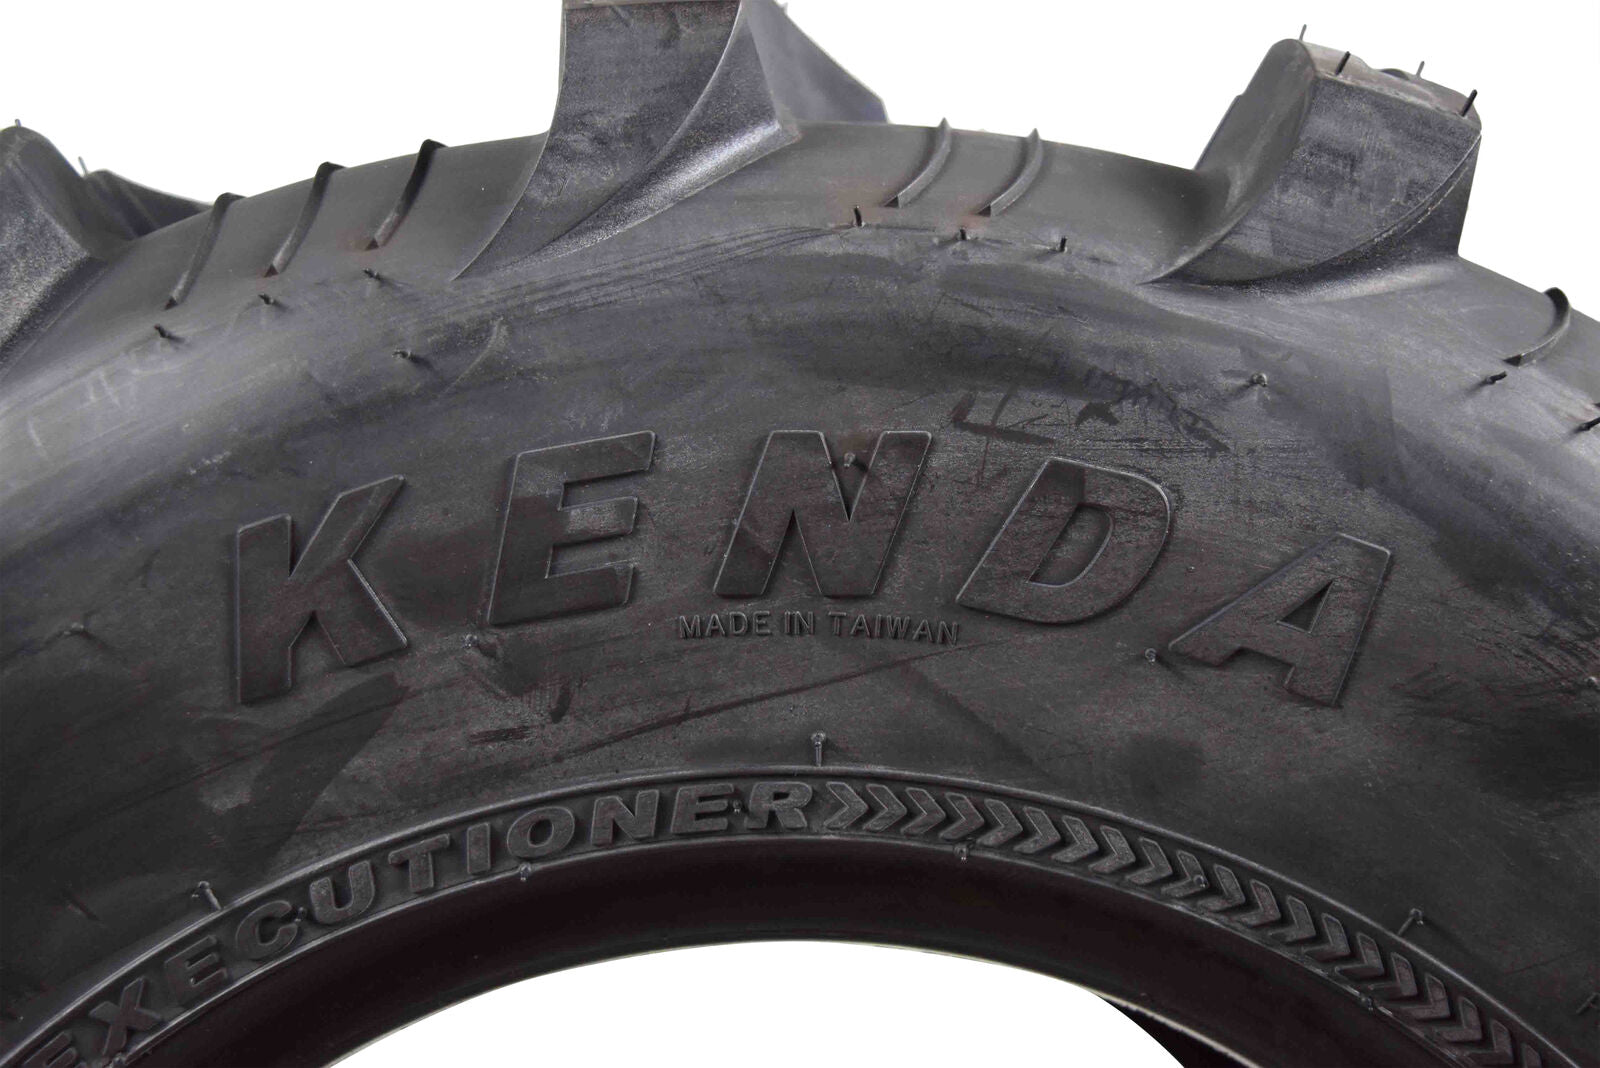 Kenda Executioner 27x12-12 6 PLY Mud ATV Rear Tire 27x12x12 K538 Single Tire